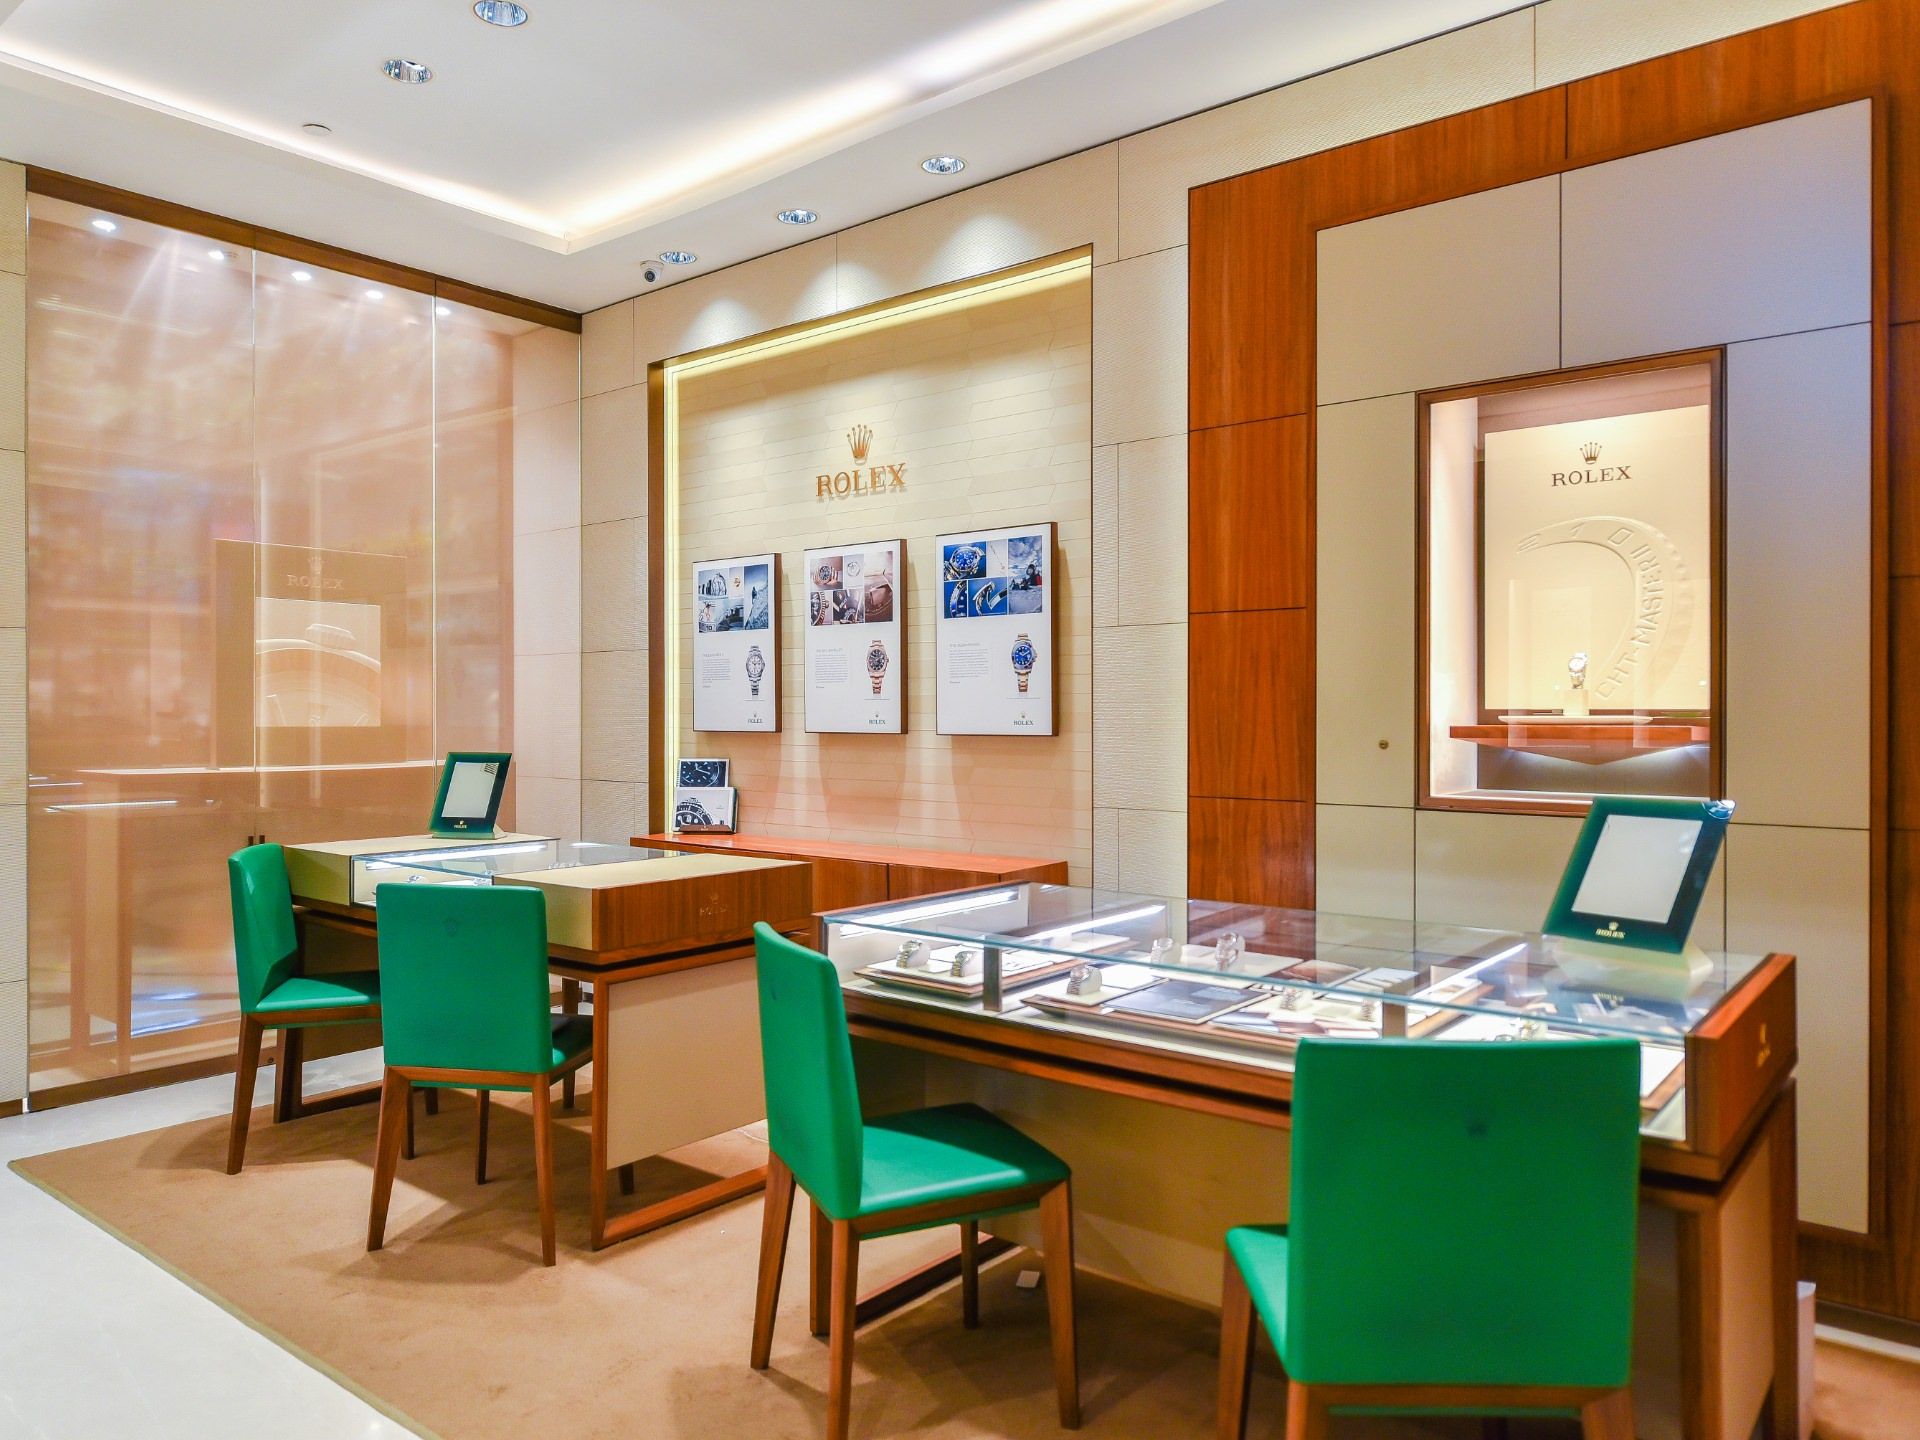 Rolex Boutique - Ethos Limited, New Delhi, Delhi